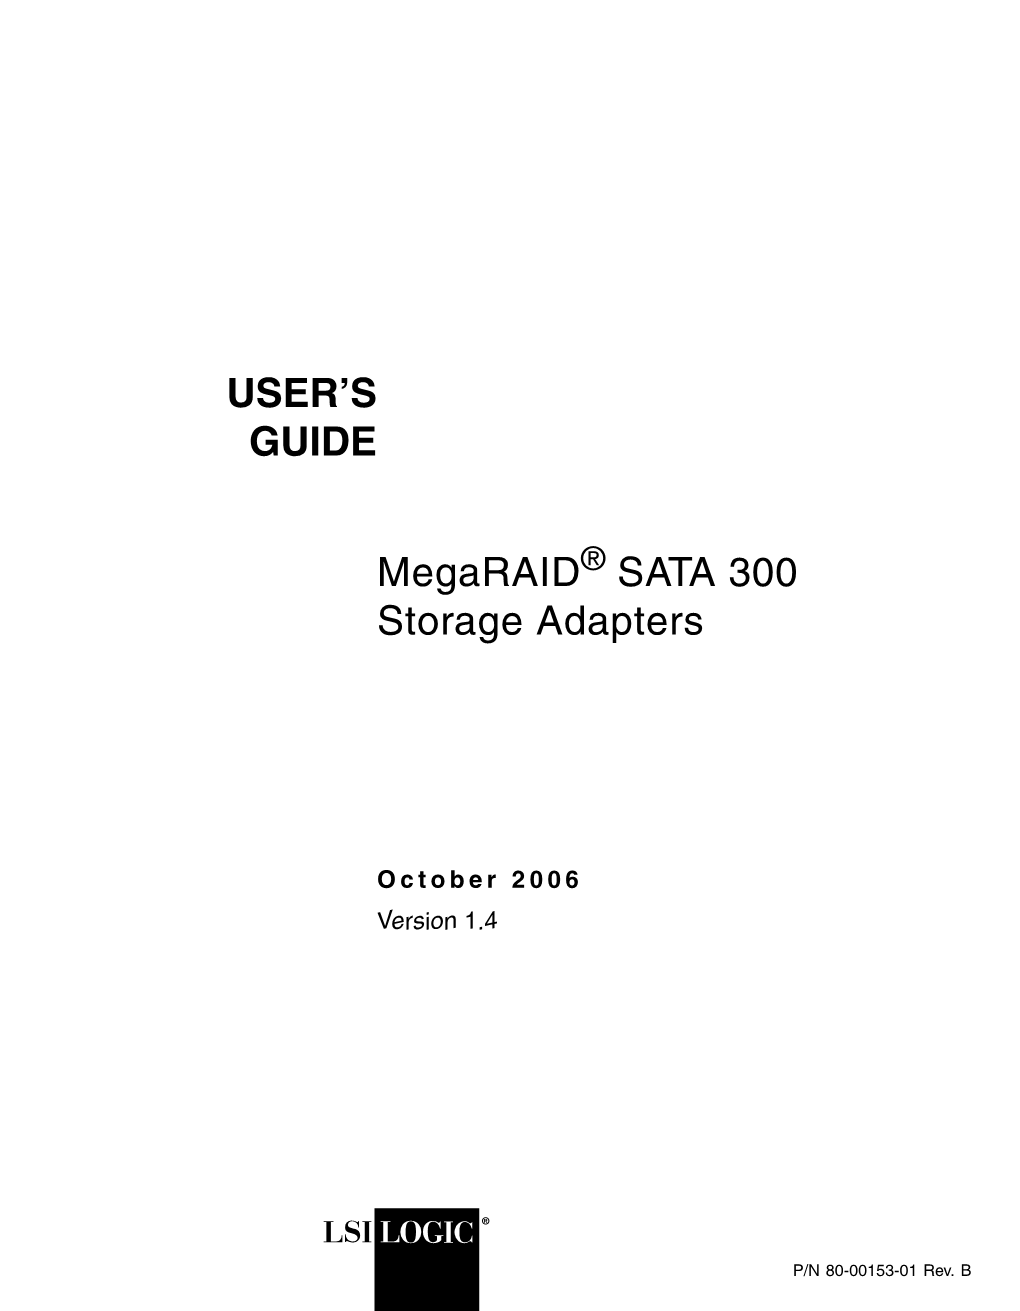 Megaraid SATA 300 Storage Adapters User's Guide